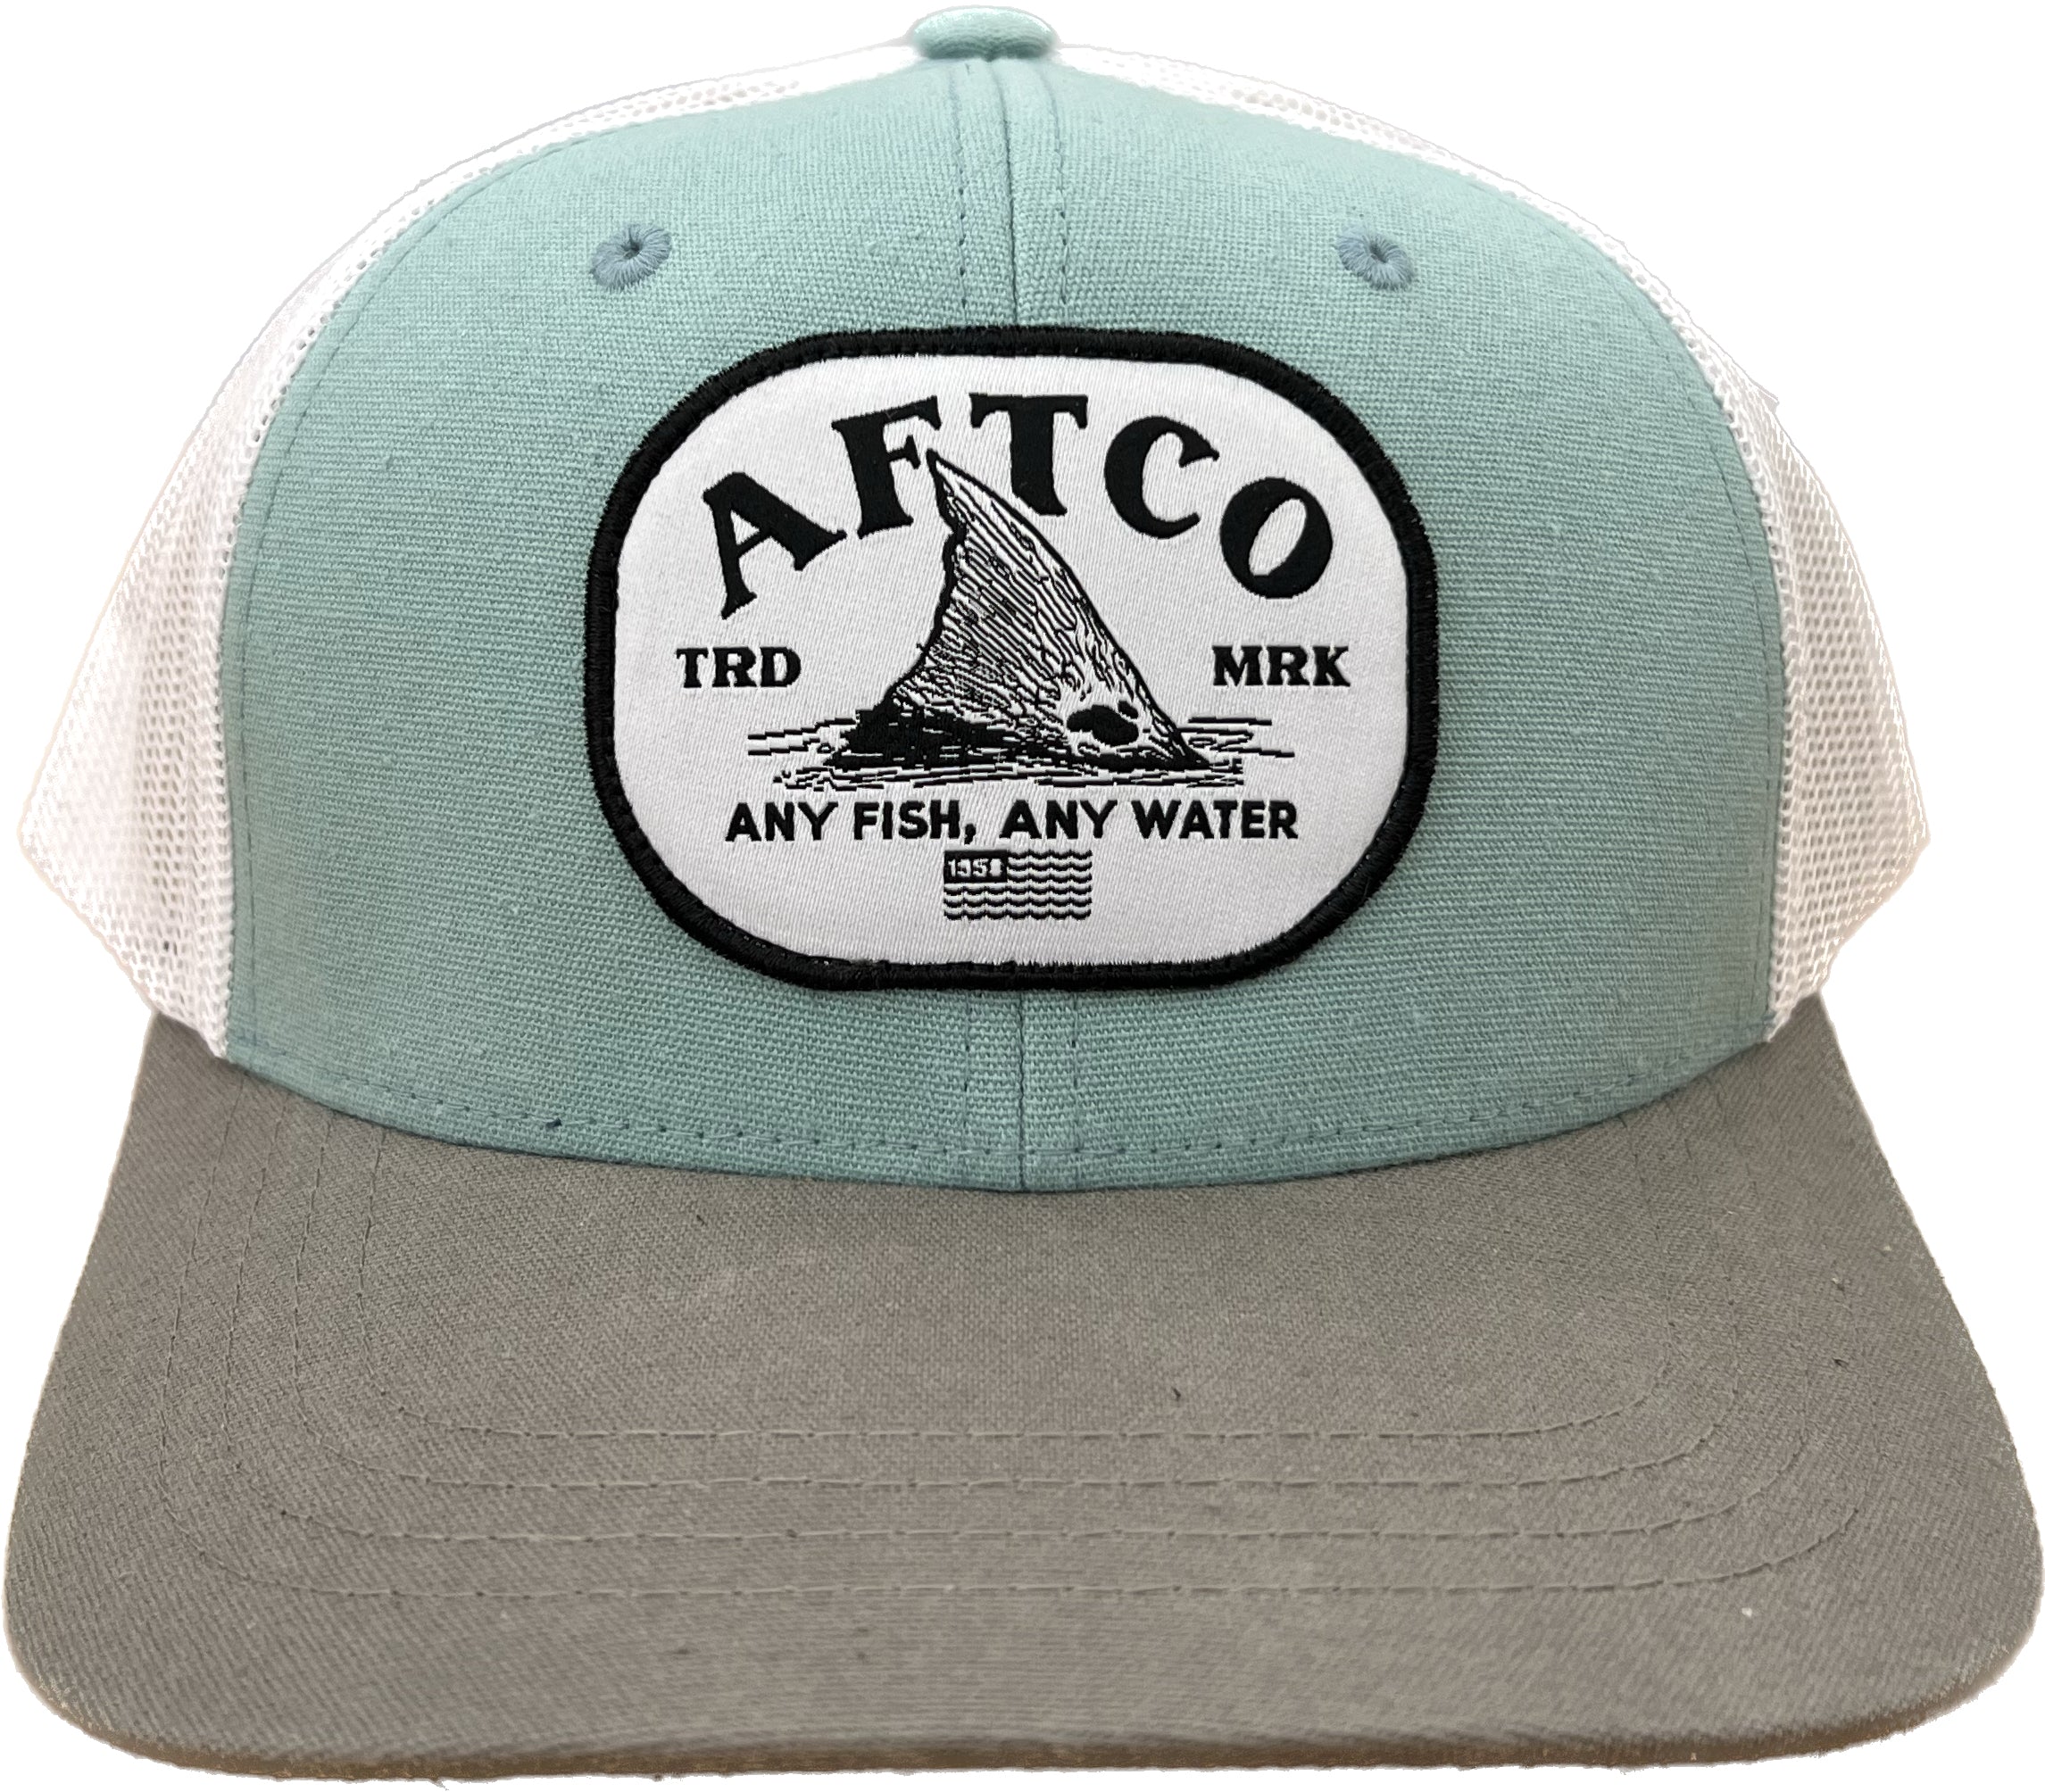 Lemonade Leather Trucker Hat – AFTCO